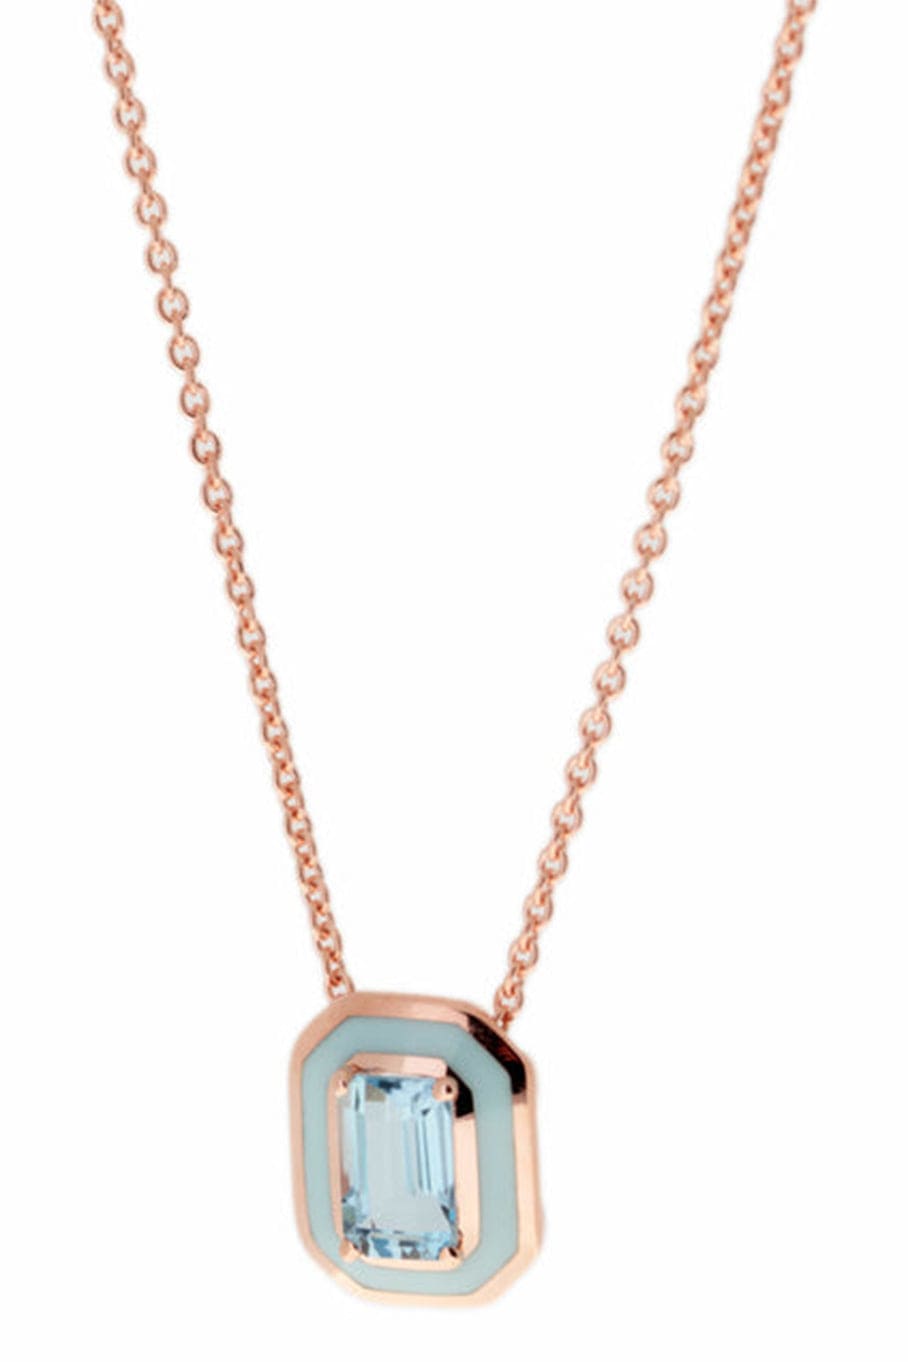 SELIM MOUZANNAR-Aquamarine Pendant Necklace-ROSE GOLD